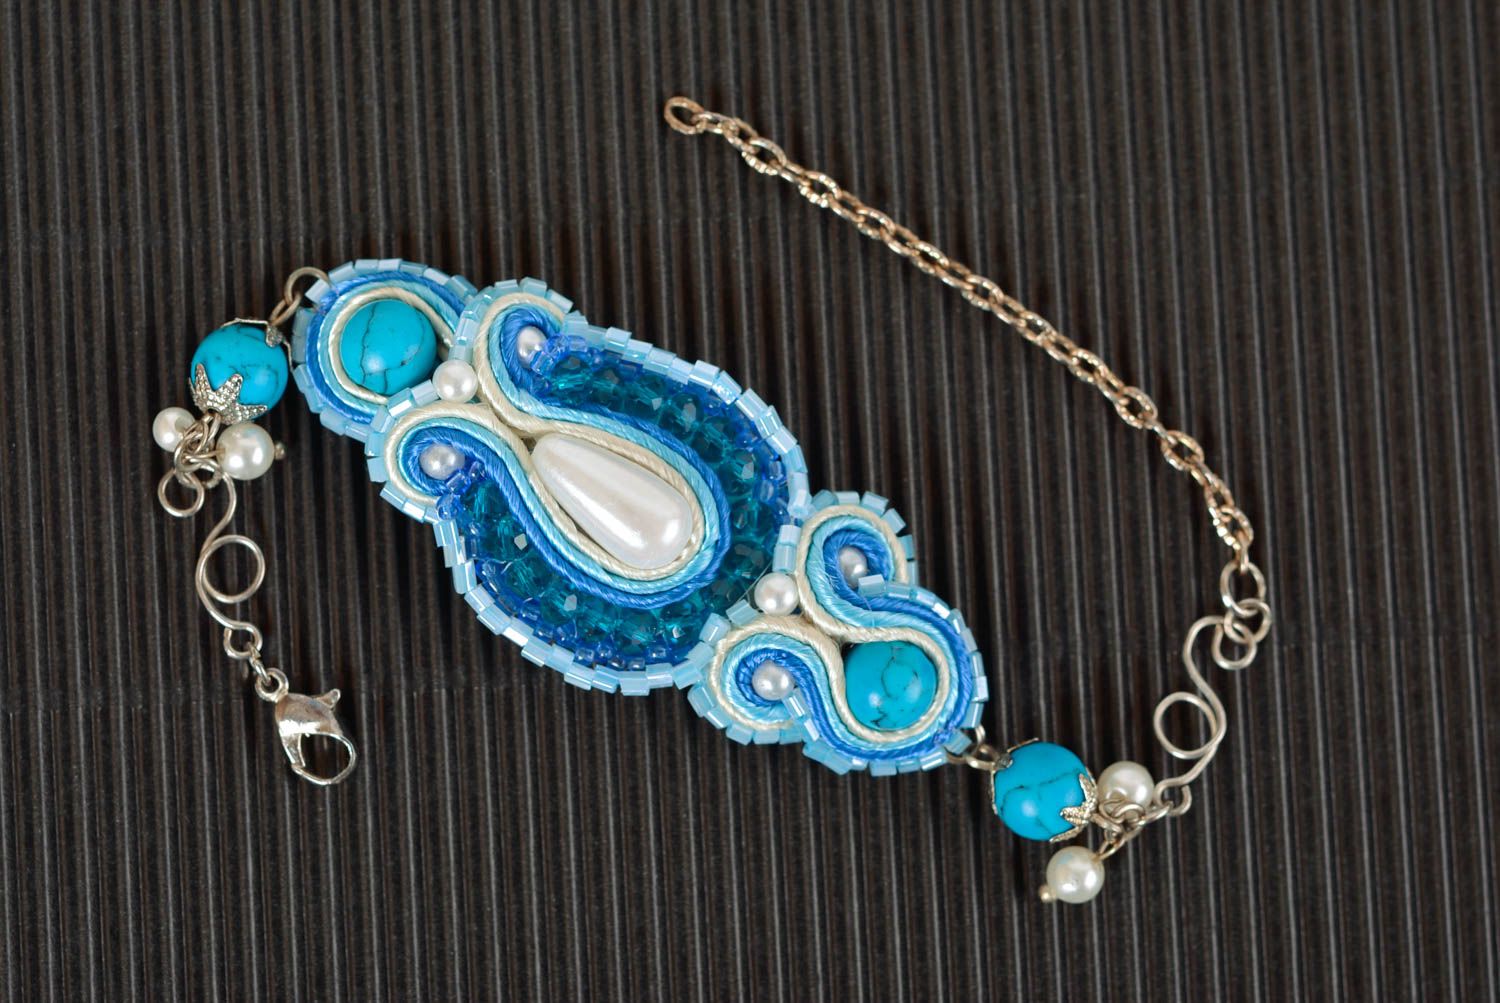 Handmade bracelet soutache accessory soutache jewelry with natural stones photo 1